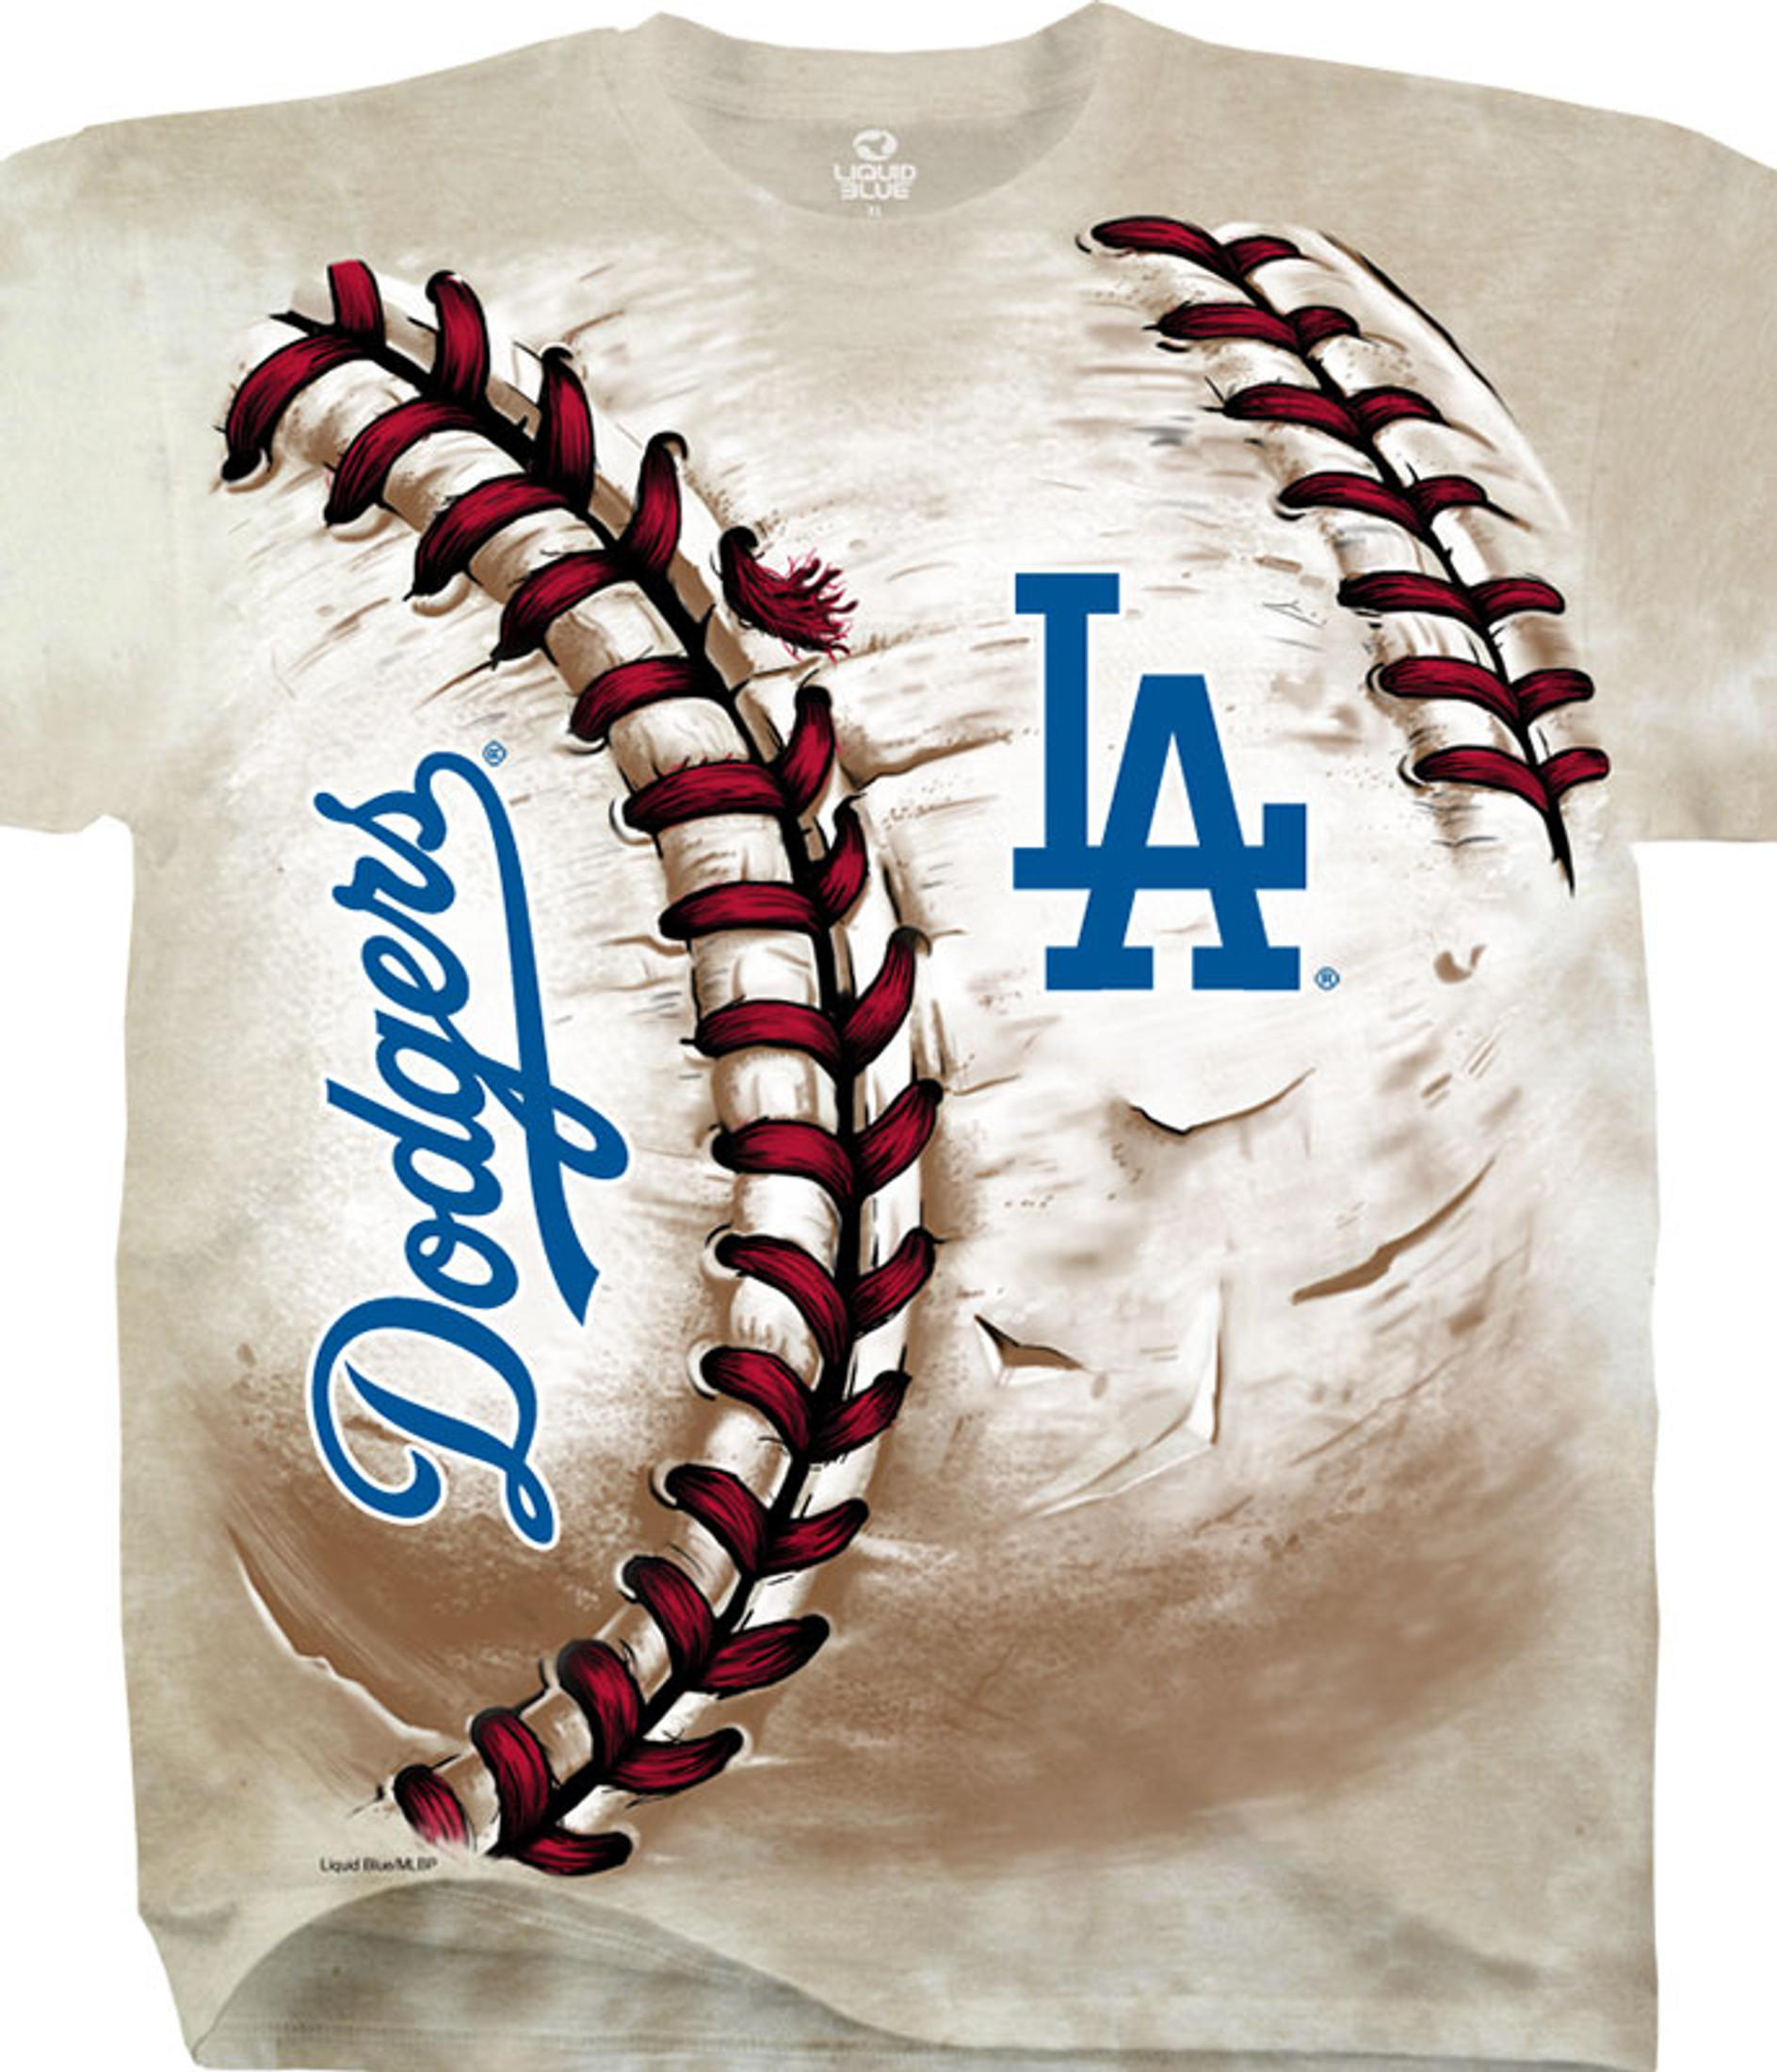 MLB Detroit Tigers Men's 3D-Style Hardball Tie-Dye T-Shirt